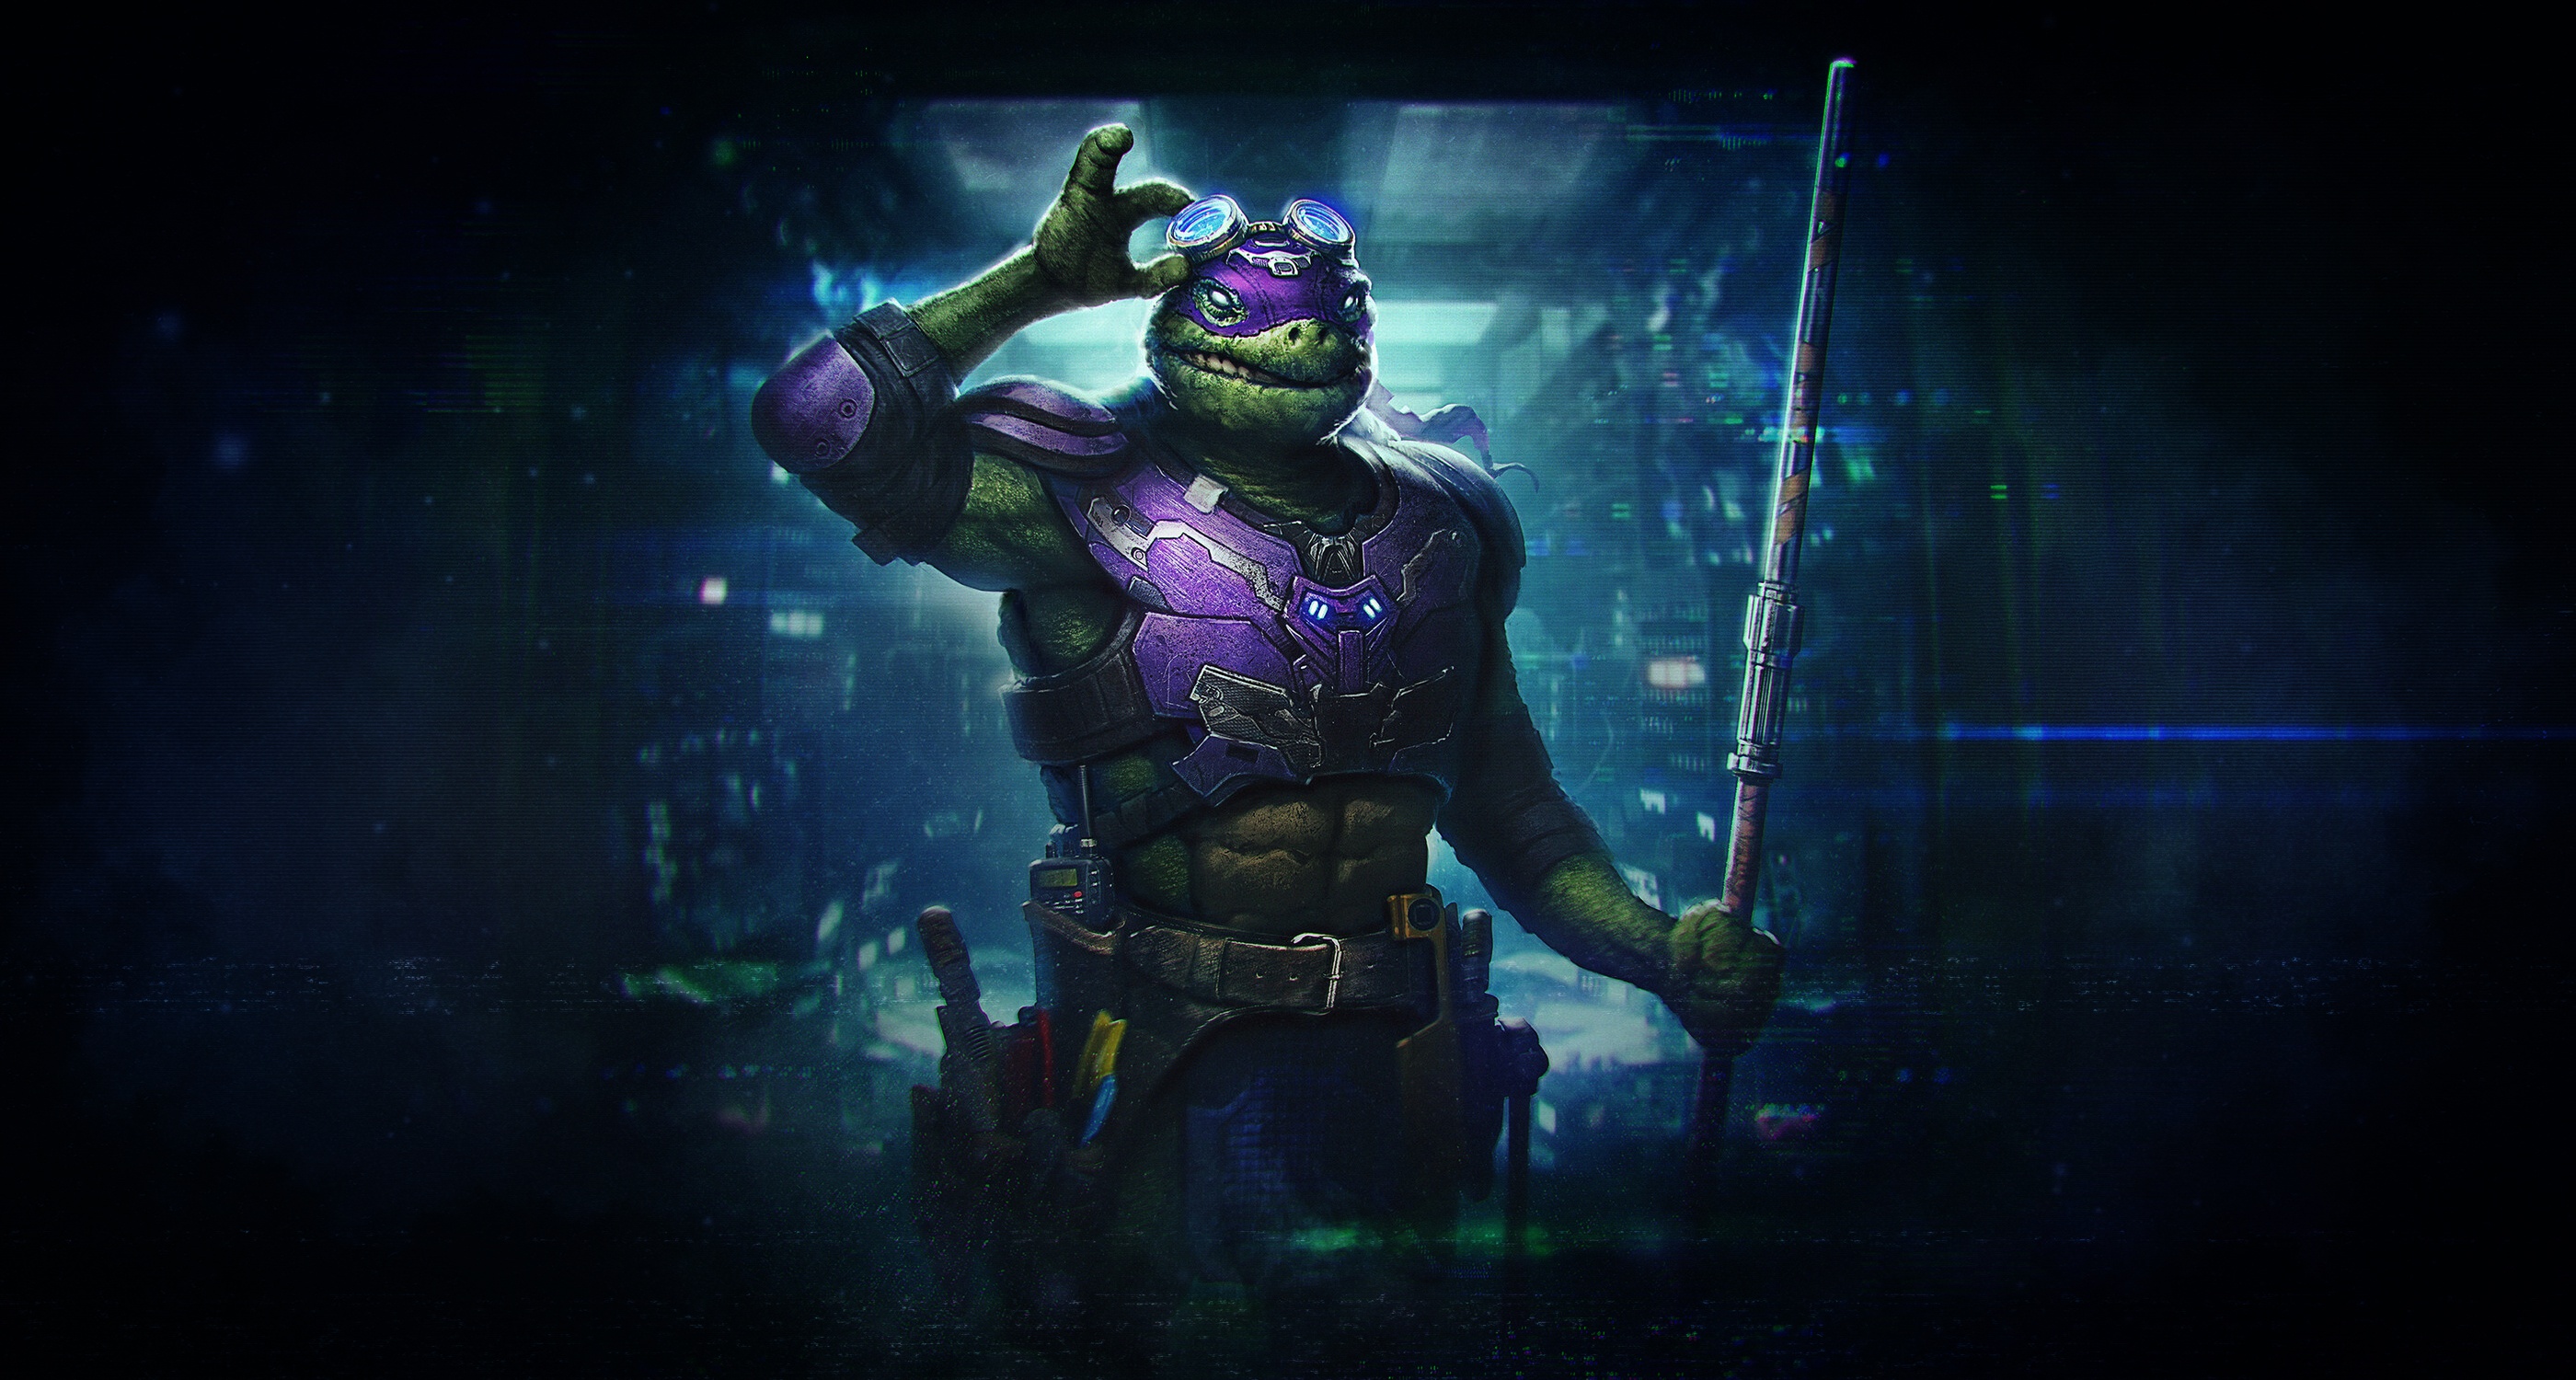 General 2800x1500 Alex Borsuk Teenage Mutant Ninja Turtles fantasy art artwork warrior Donatello  purple